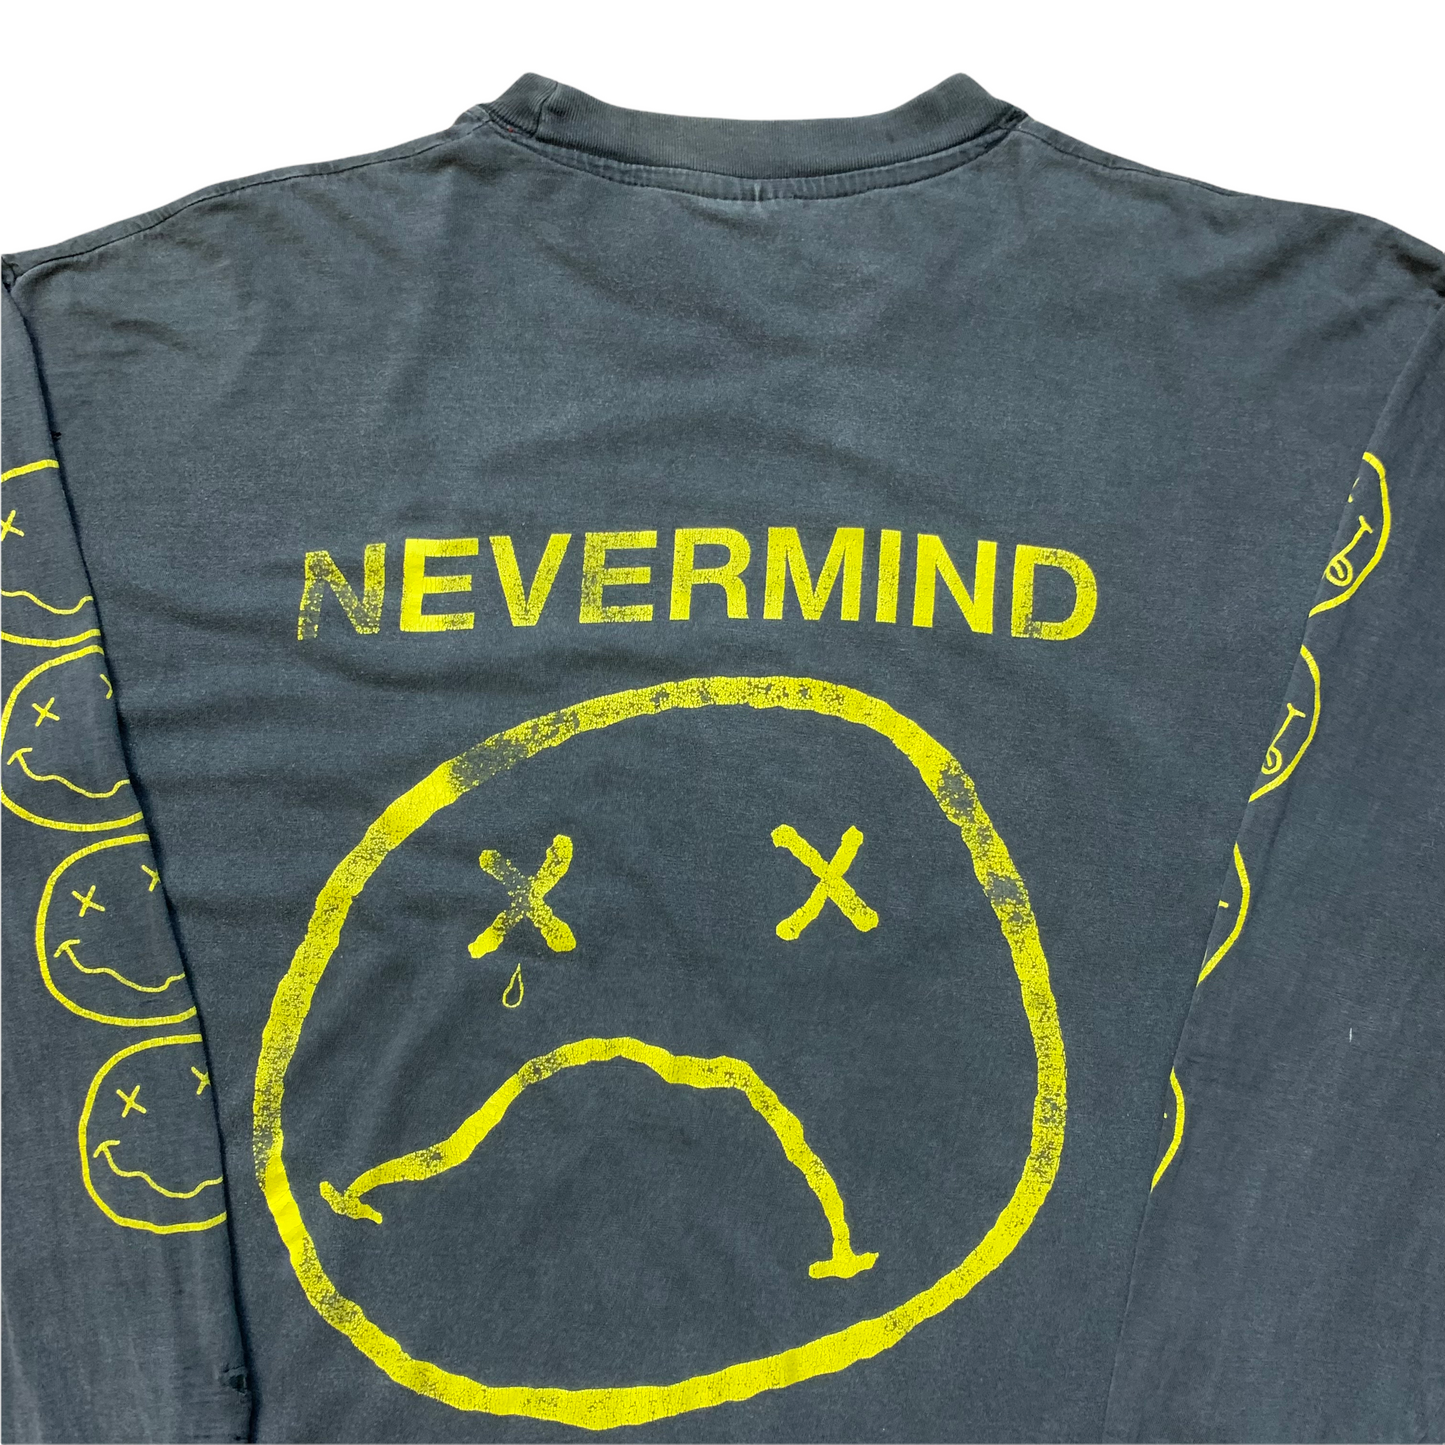 Early 90s Nirvana 'Nevermind' (XL)